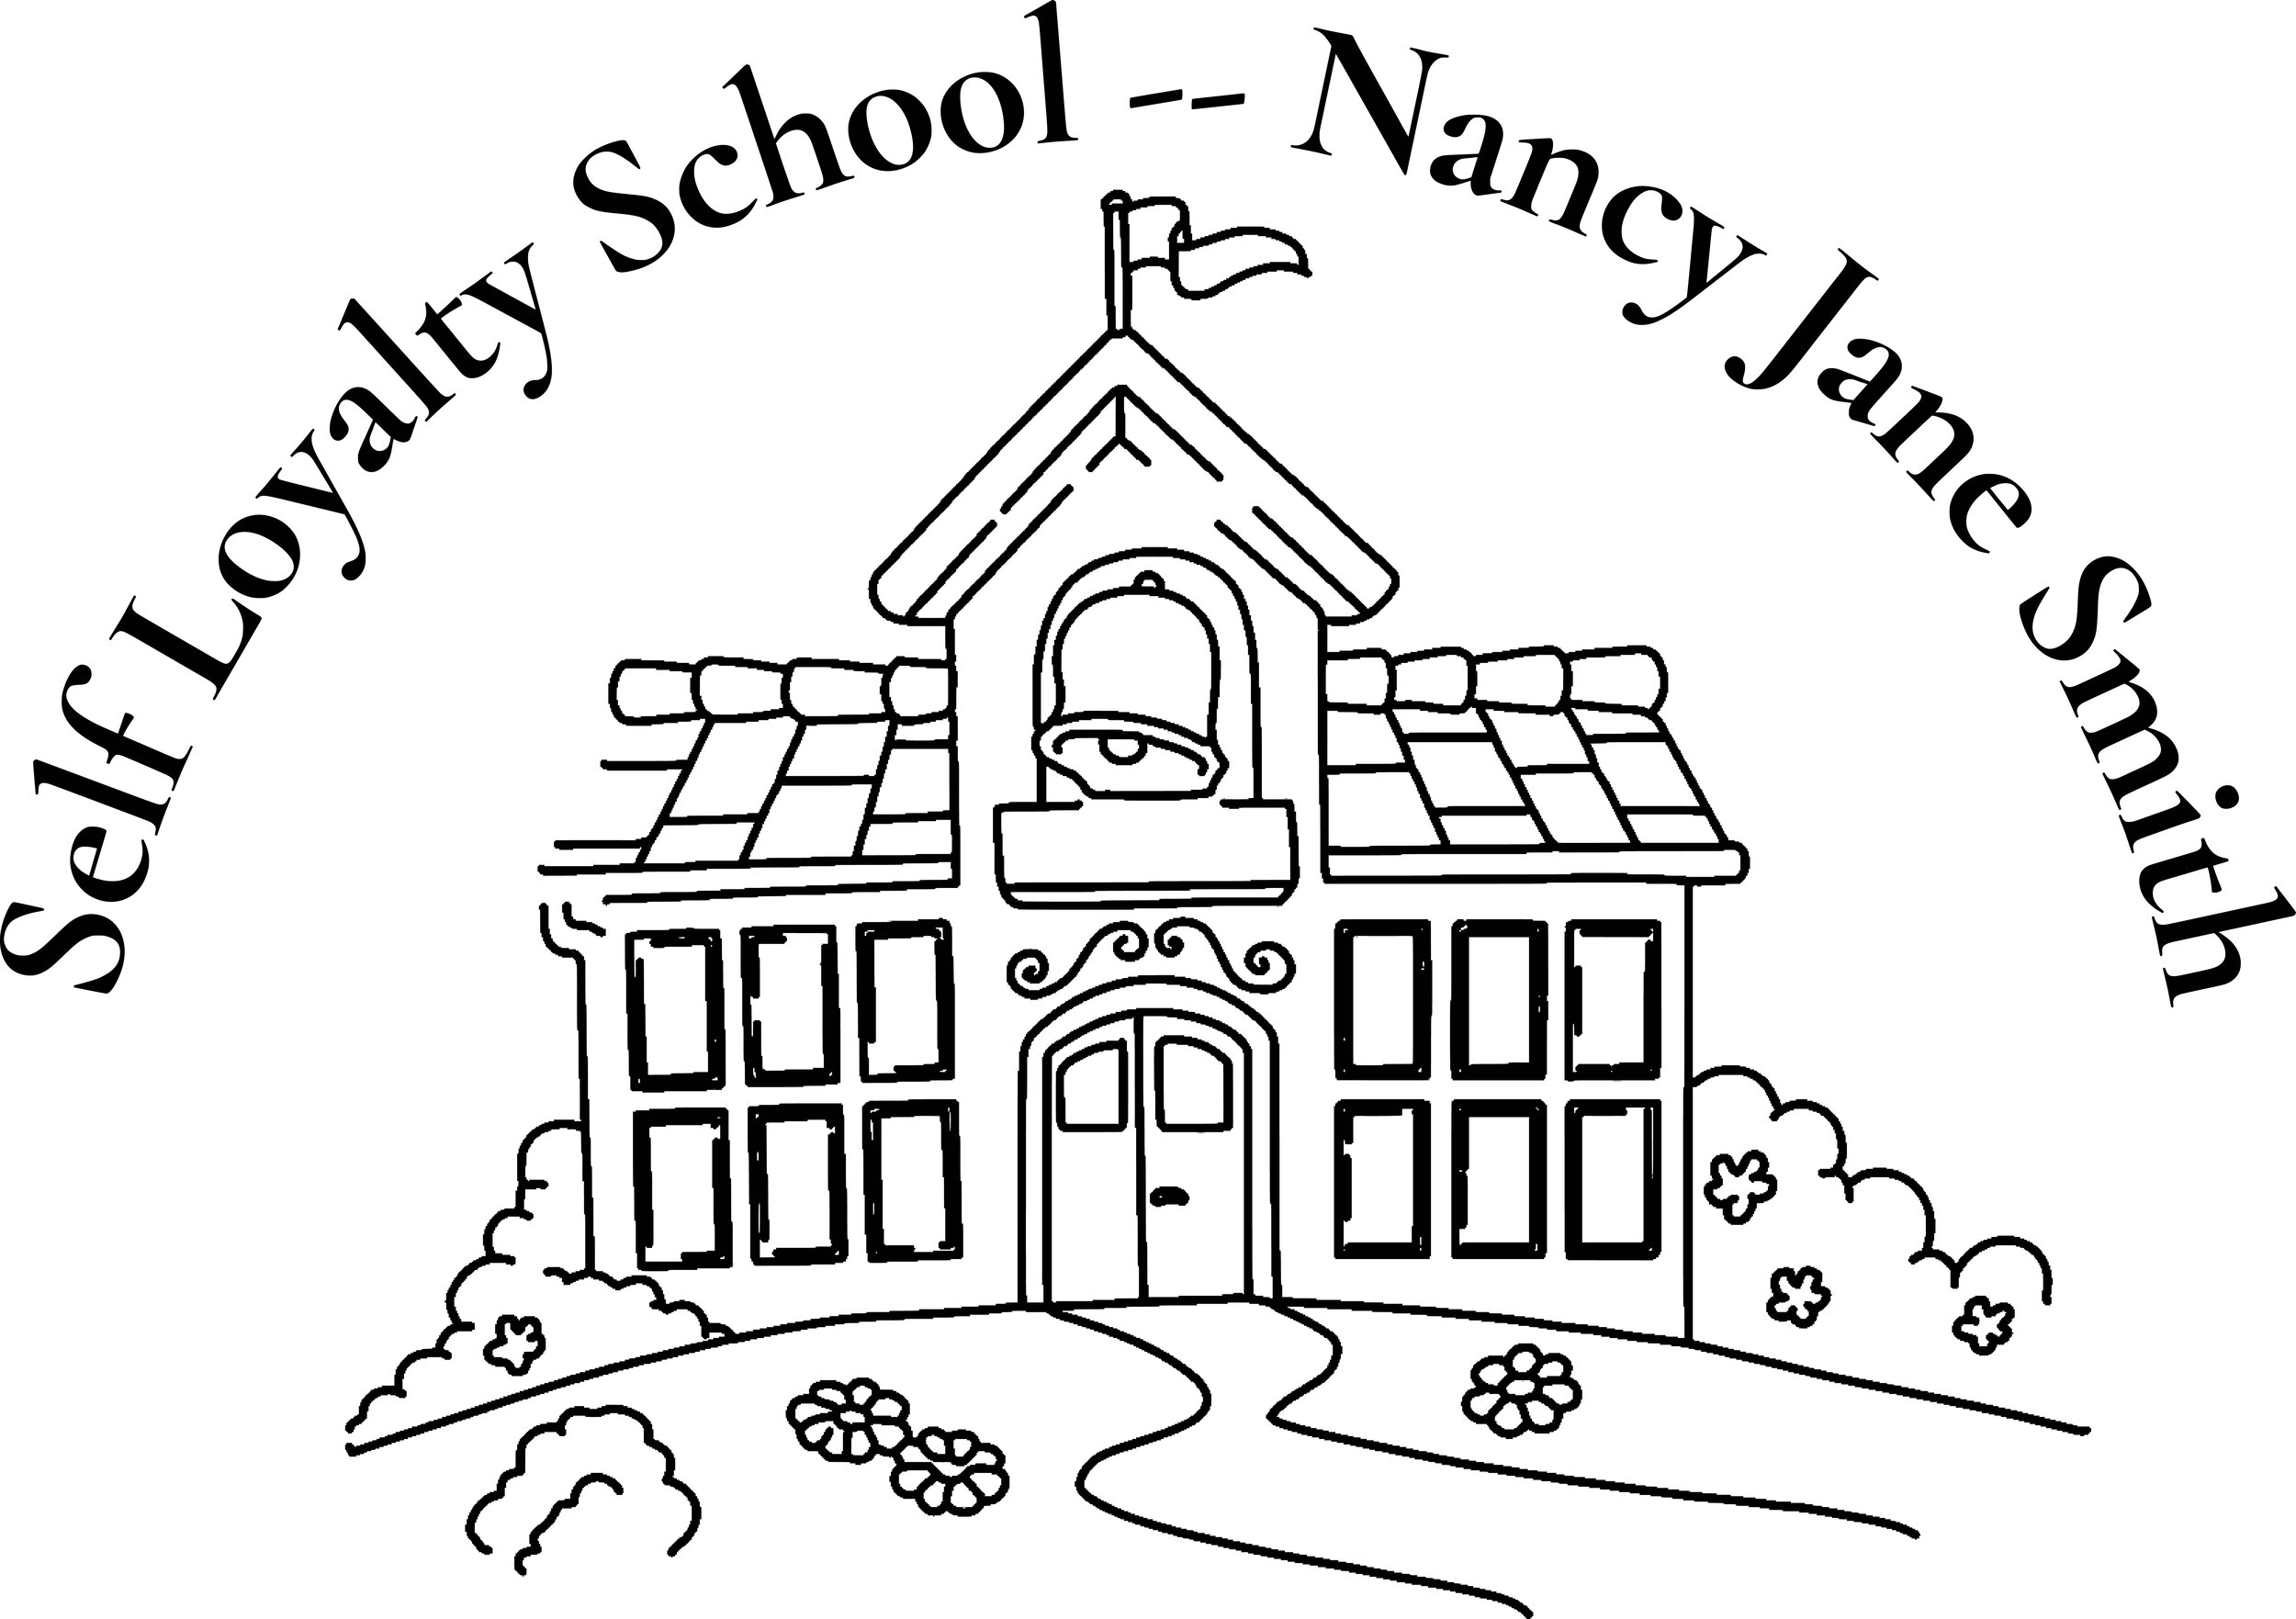 Self Loyalty School logo.jpg